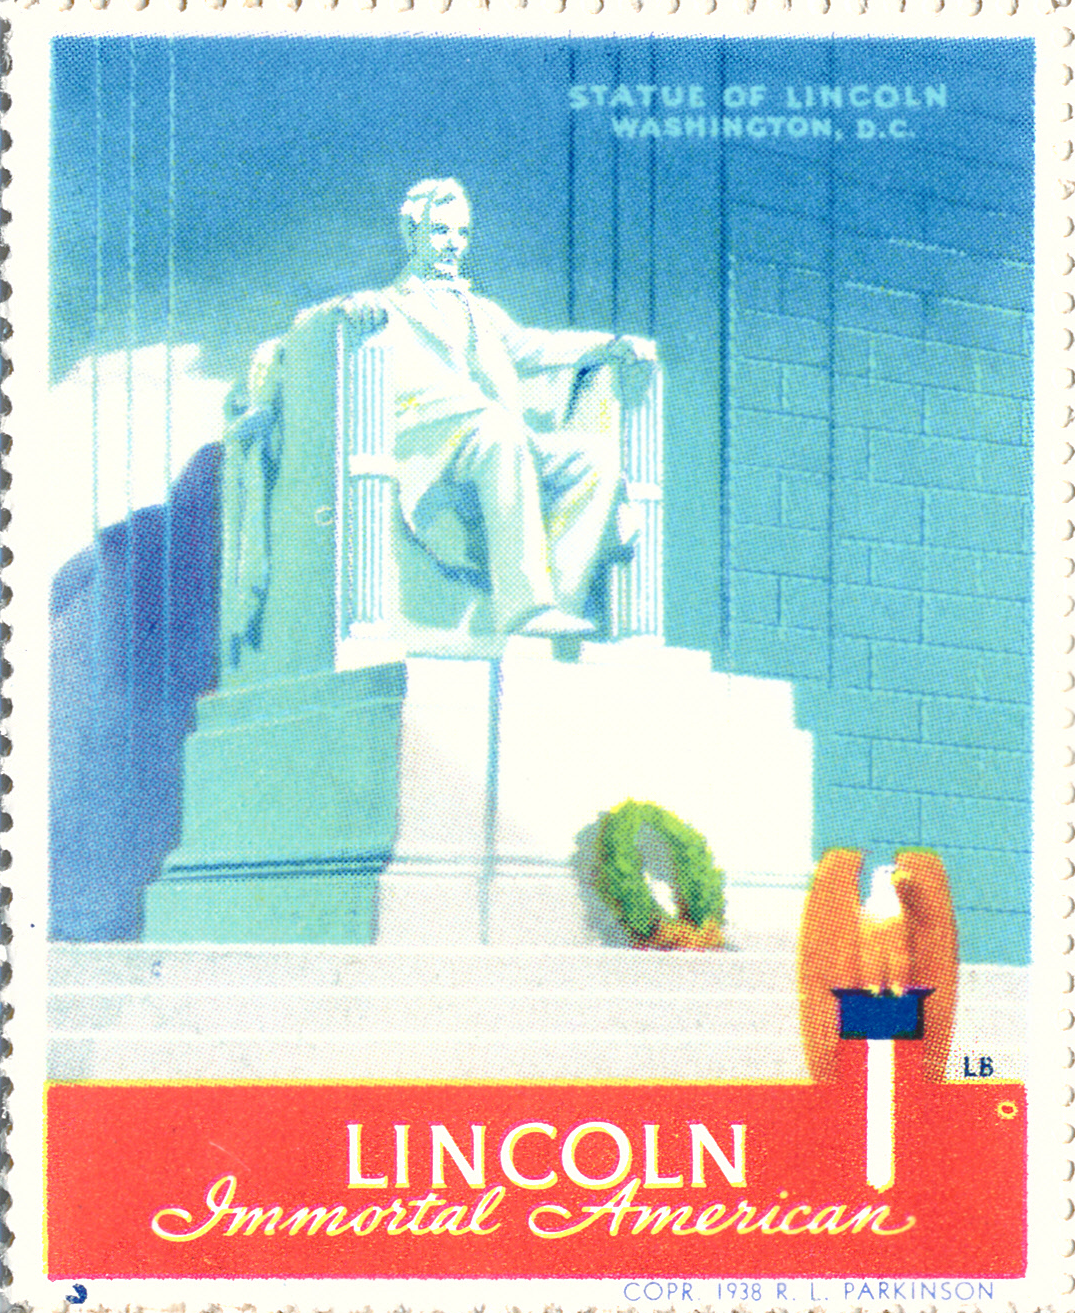 1938 commemorative stamp